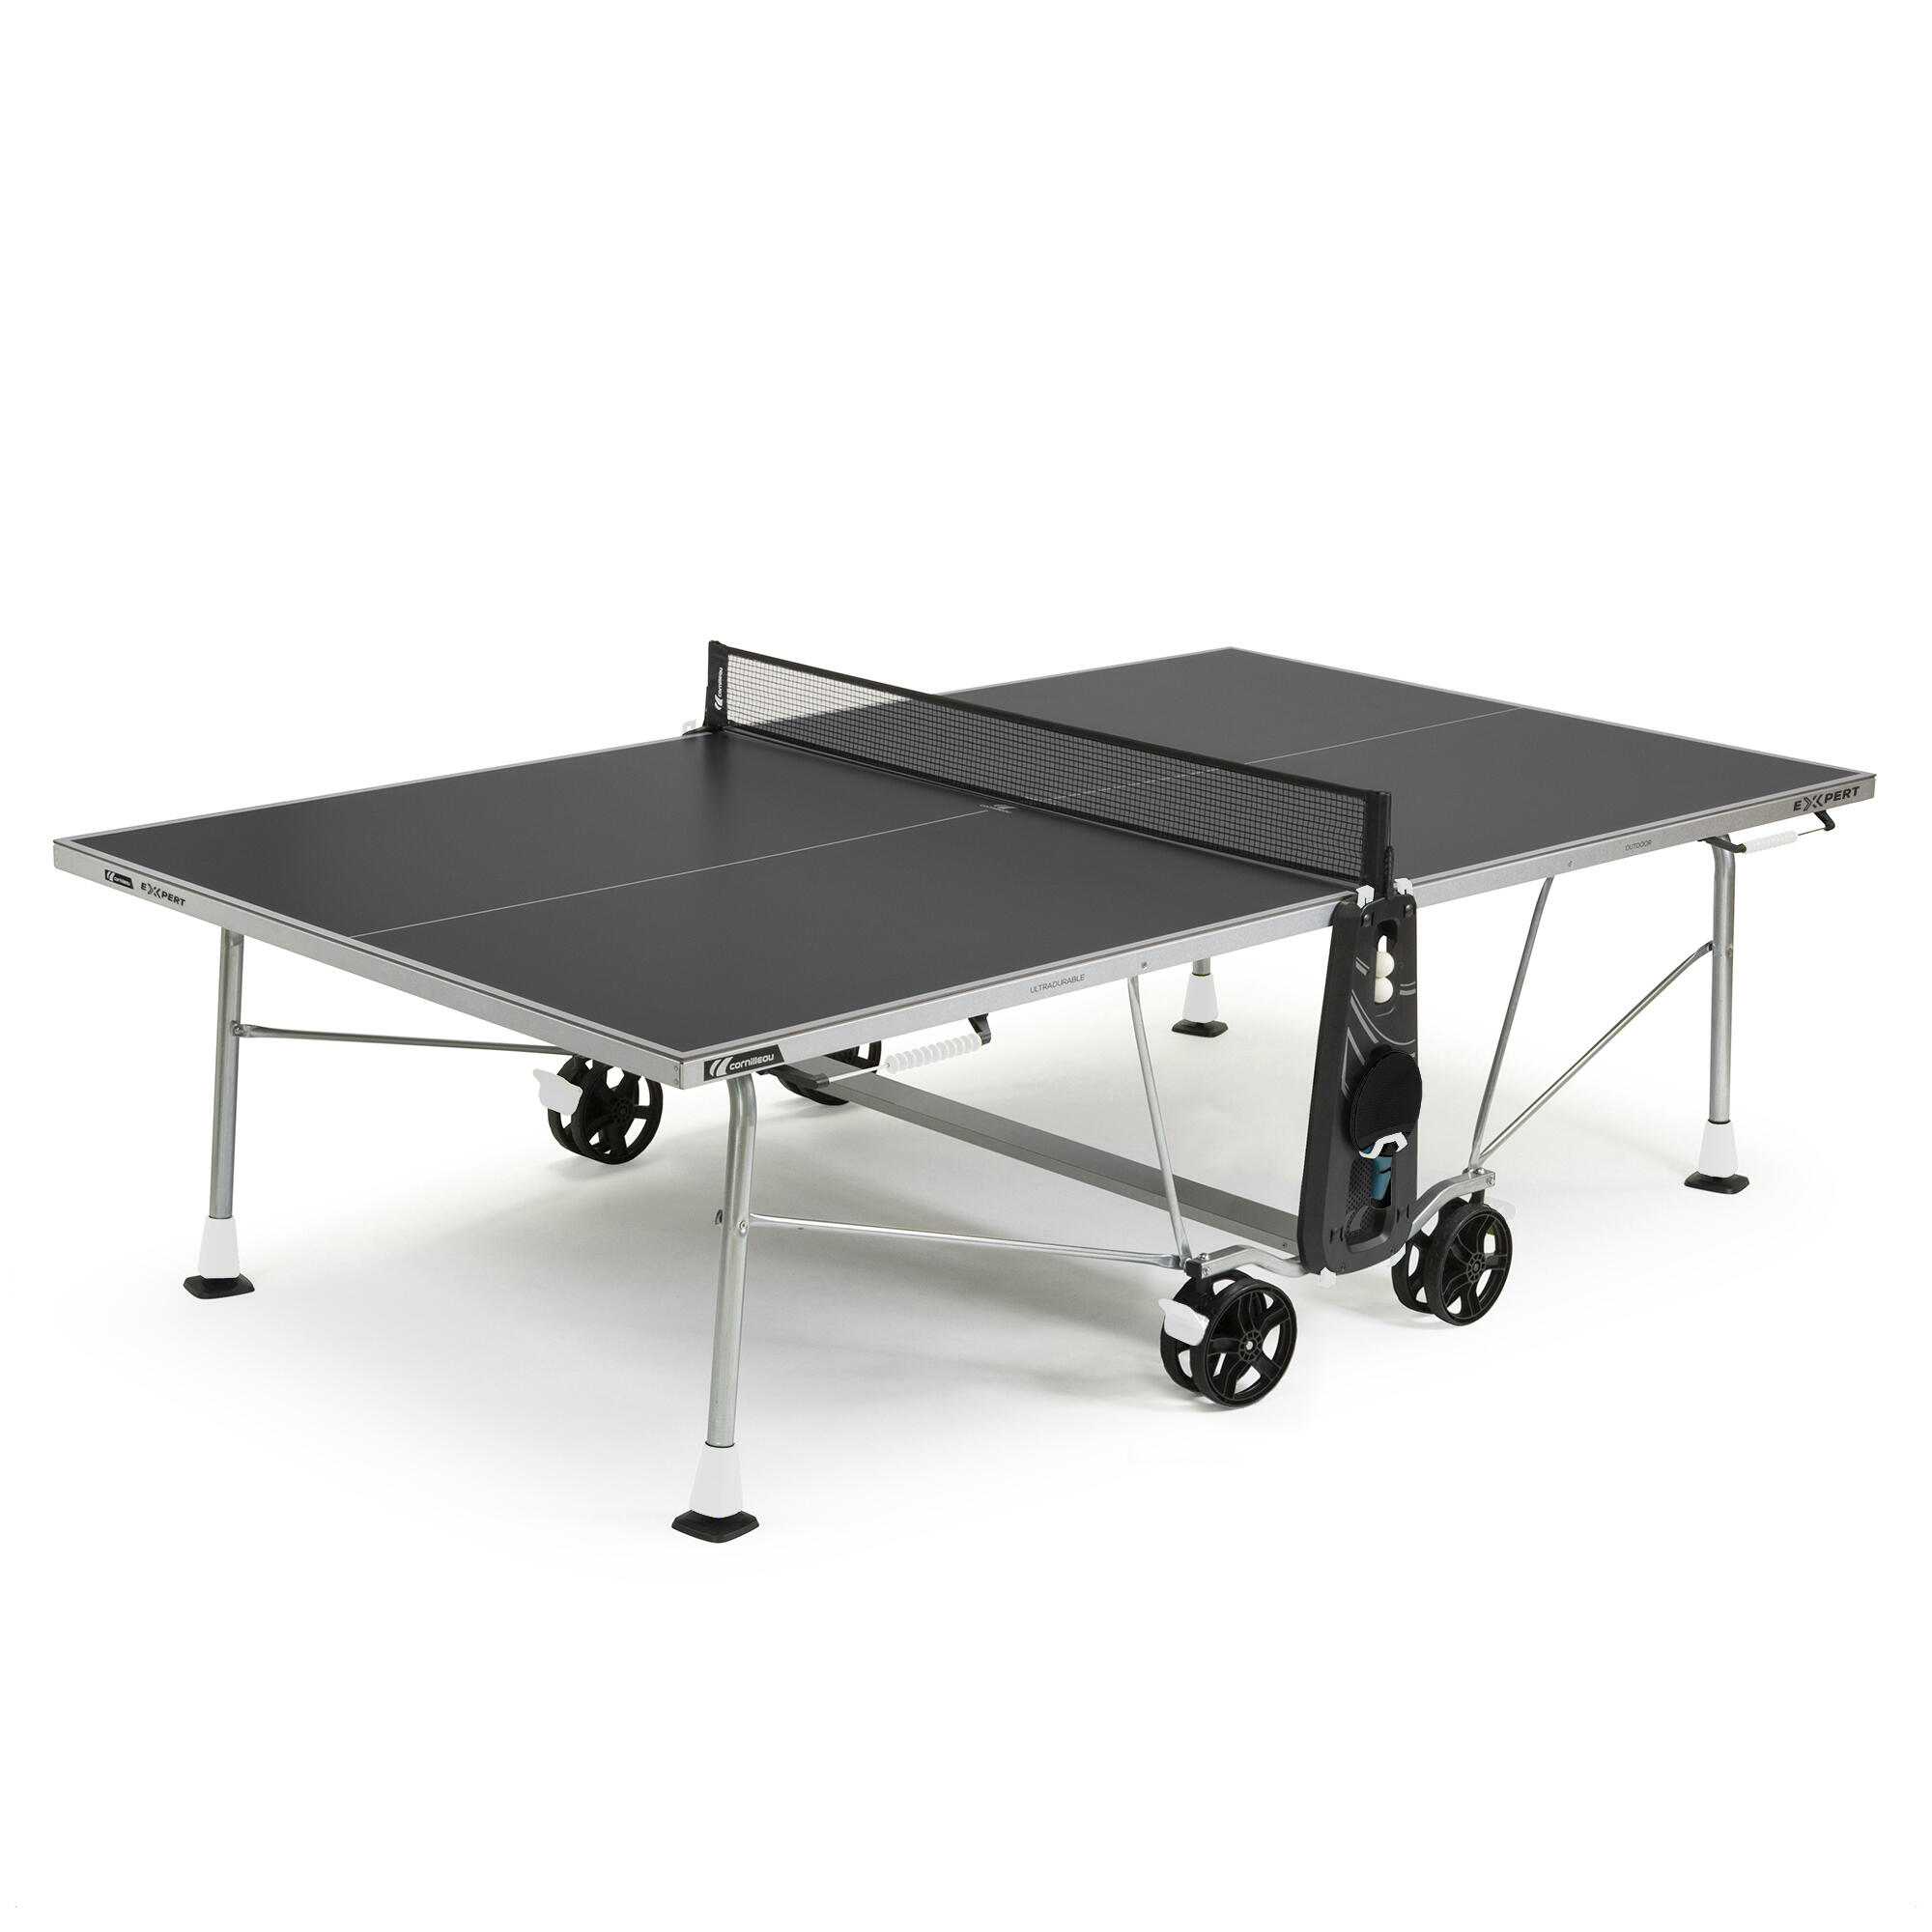 Recreational Table Tennis Table Advanced Outdoor - Grey 1/10